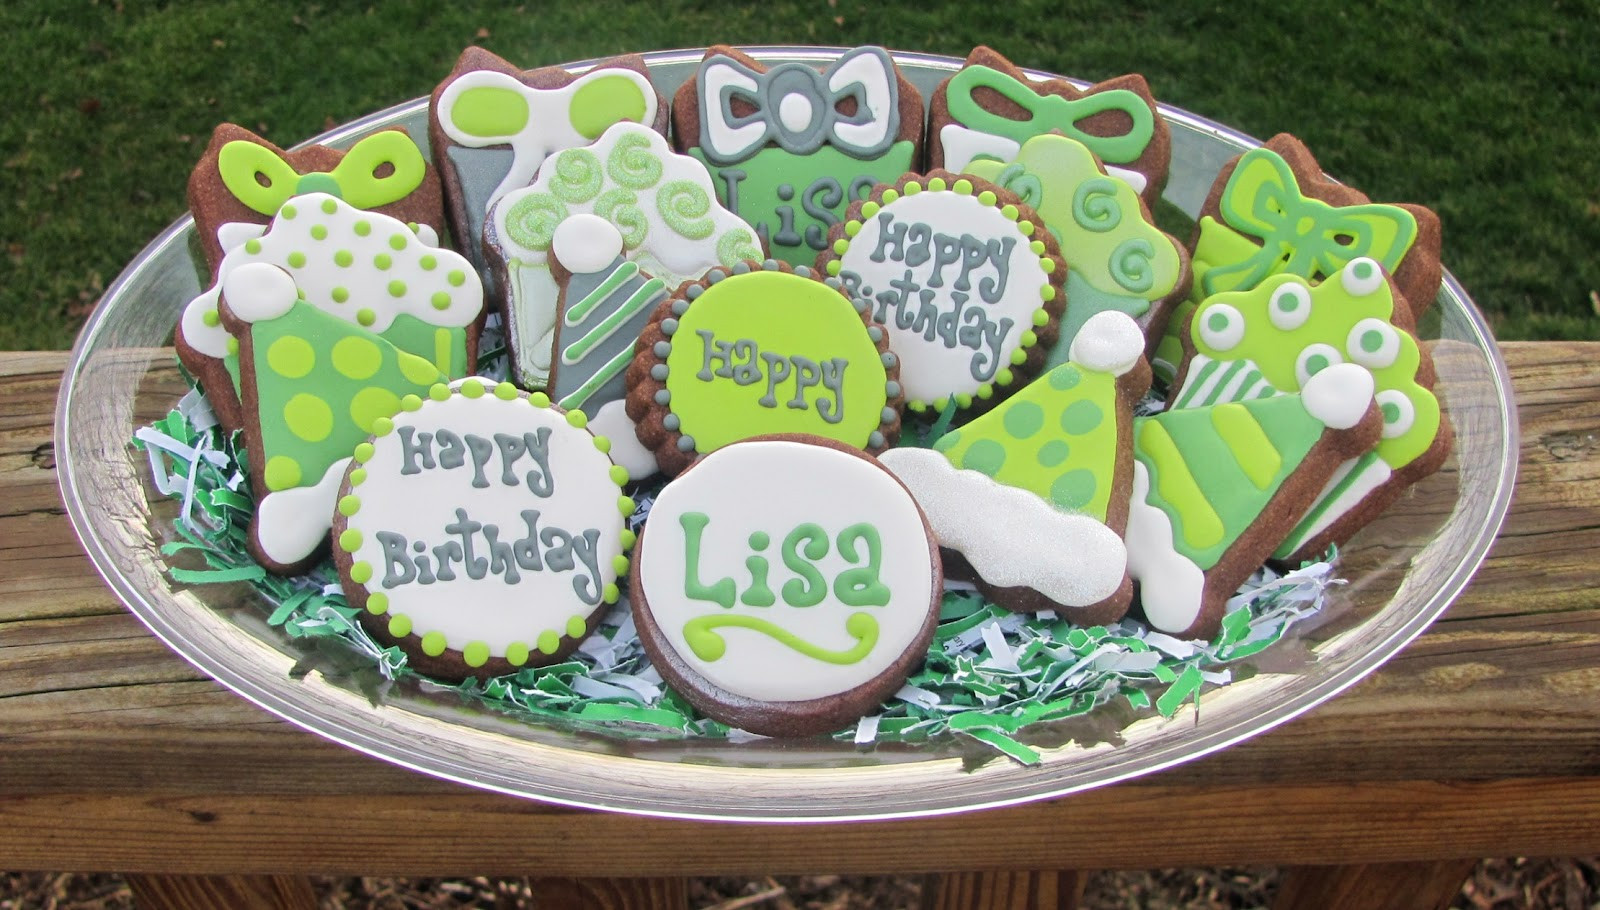 Happy Birthday Lisa Cake
 Hello Cupcake Happy Birthday Lisa